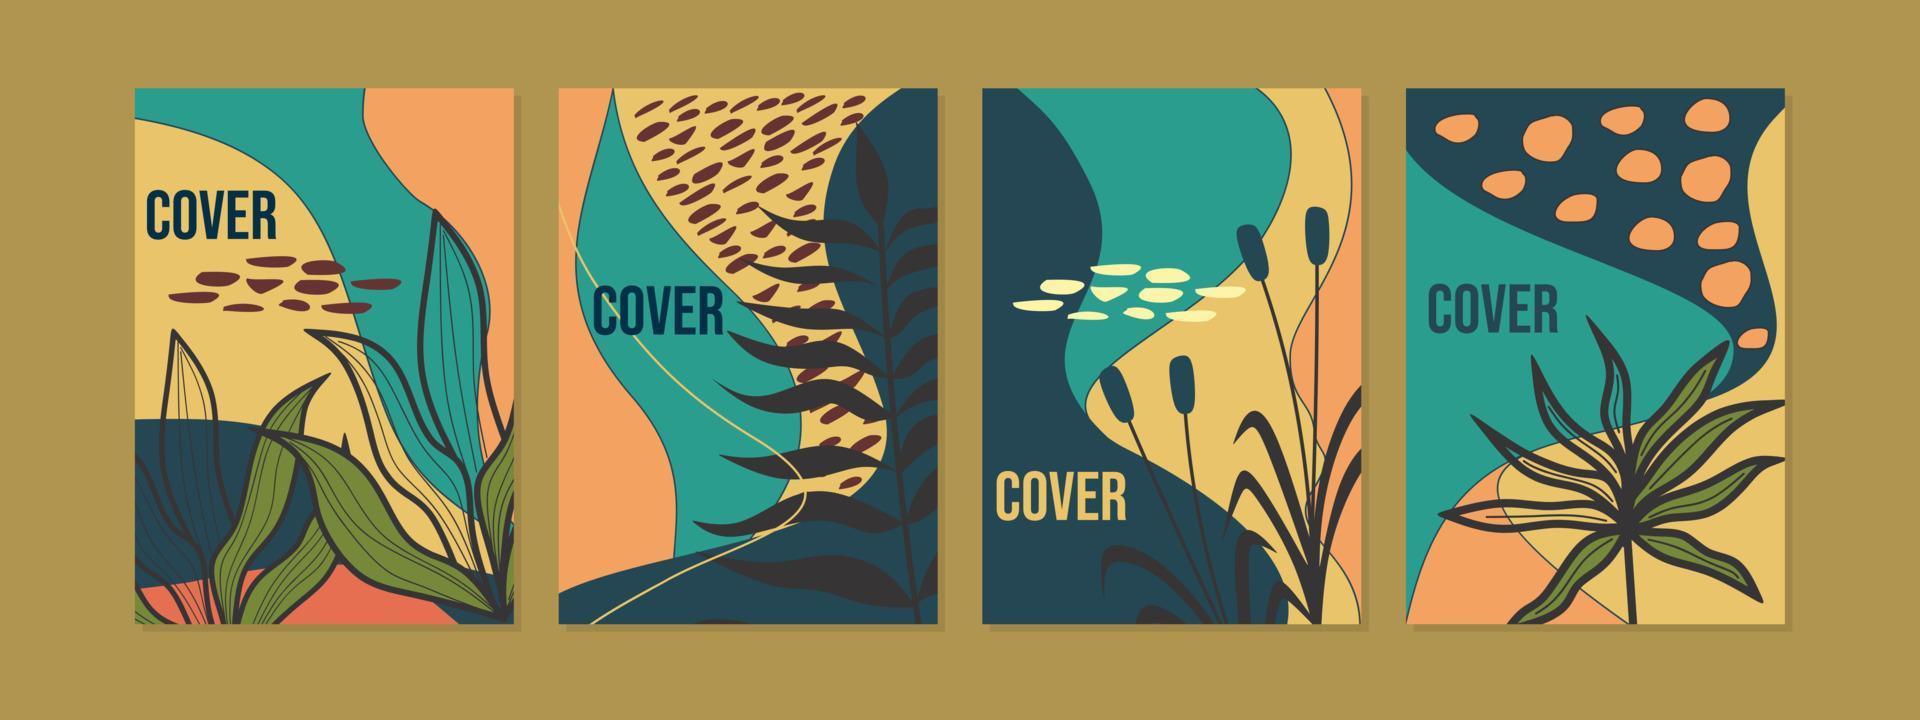 conjunto de diseño de portada botánica abstracta de 4 páginas en tamaño de diseño a4.fondo de dibujos animados dibujados a mano.para cuadernos, planificadores, folletos, libros, catálogos. vector